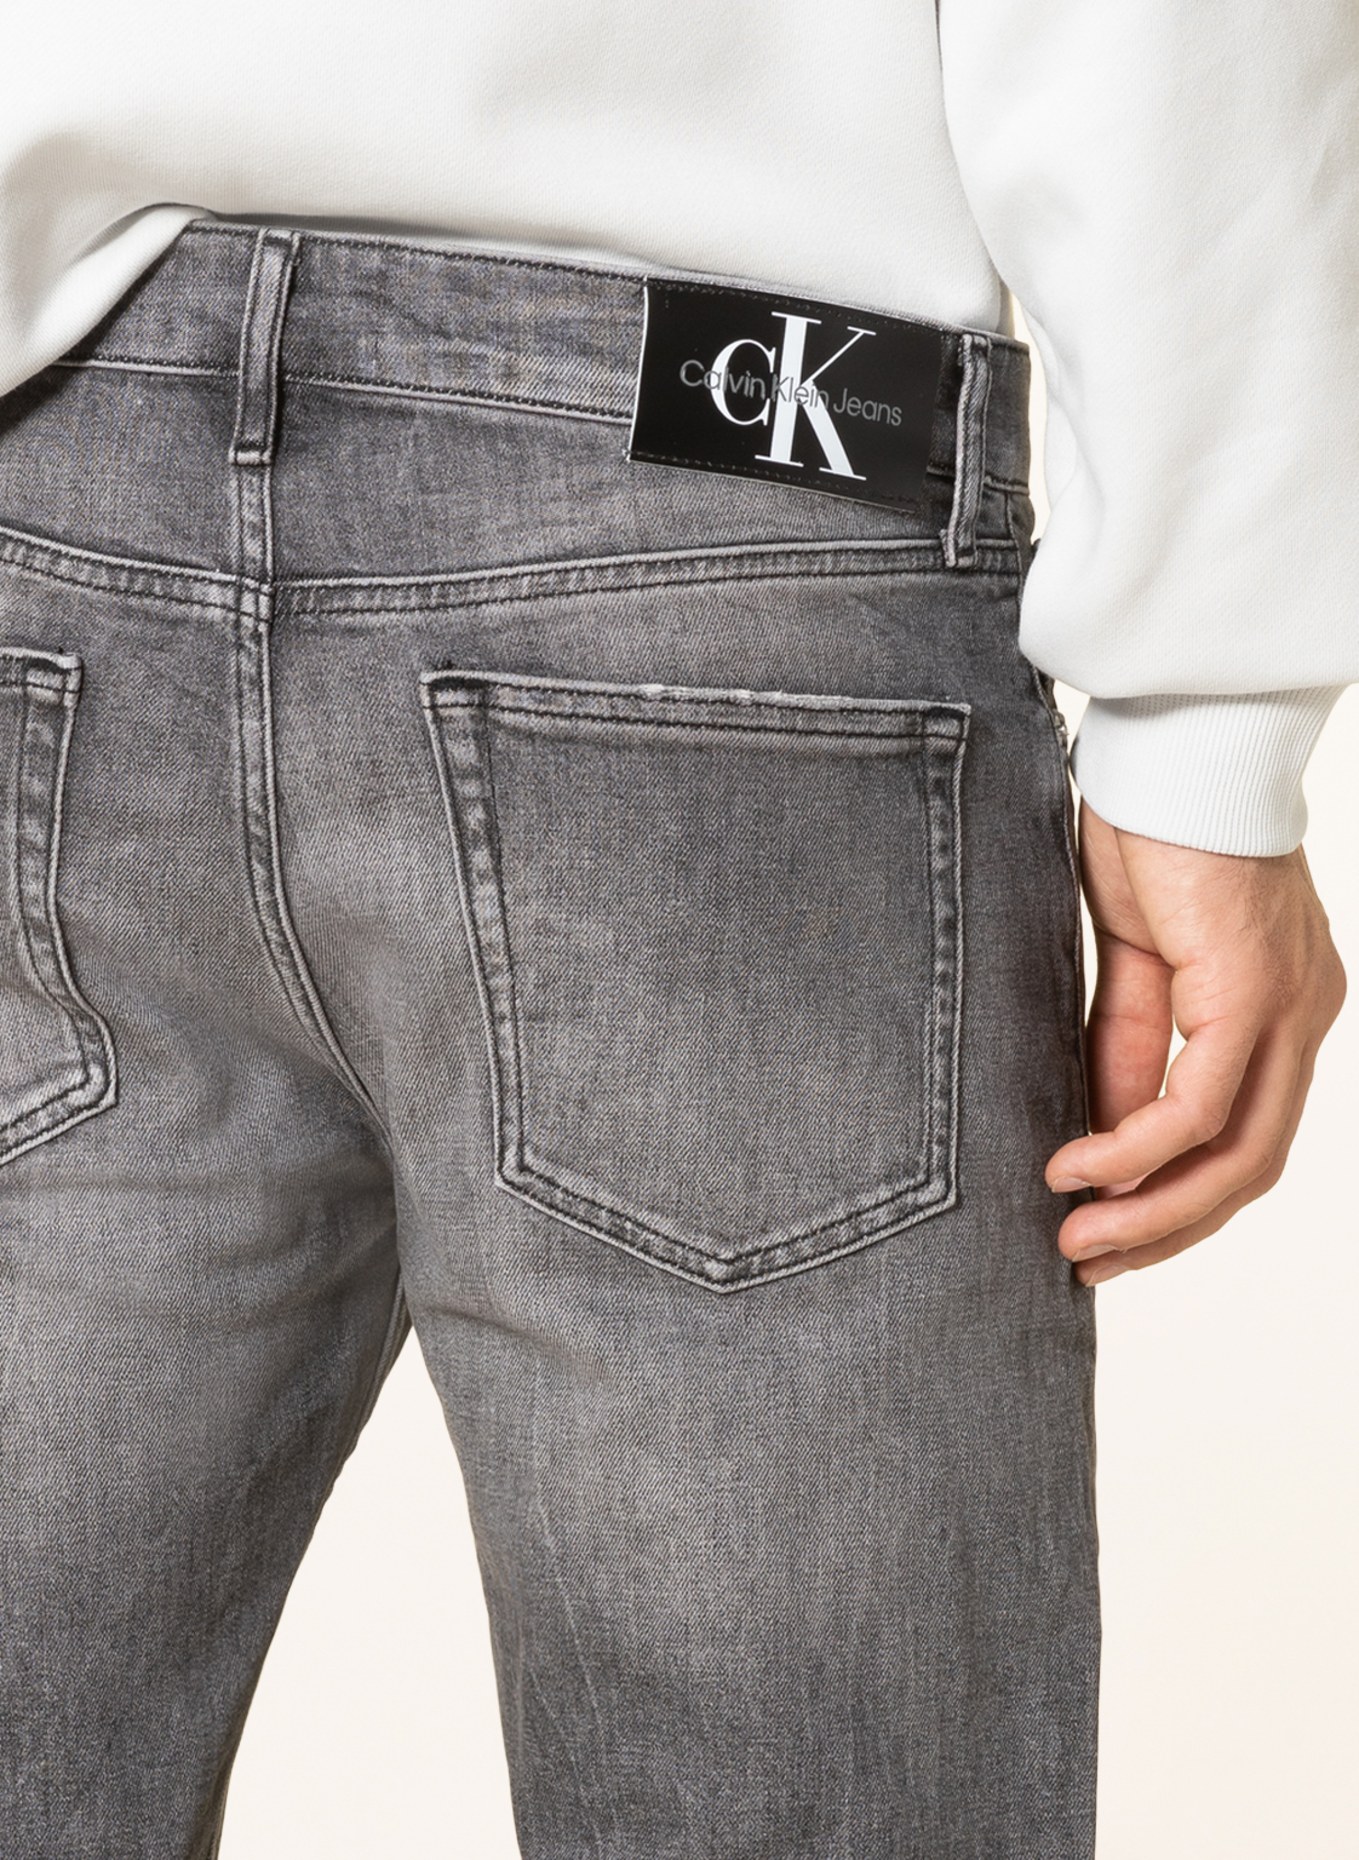 Calvin Klein Jeans Jeans Slim 1bz denim in Fit grey Tapered